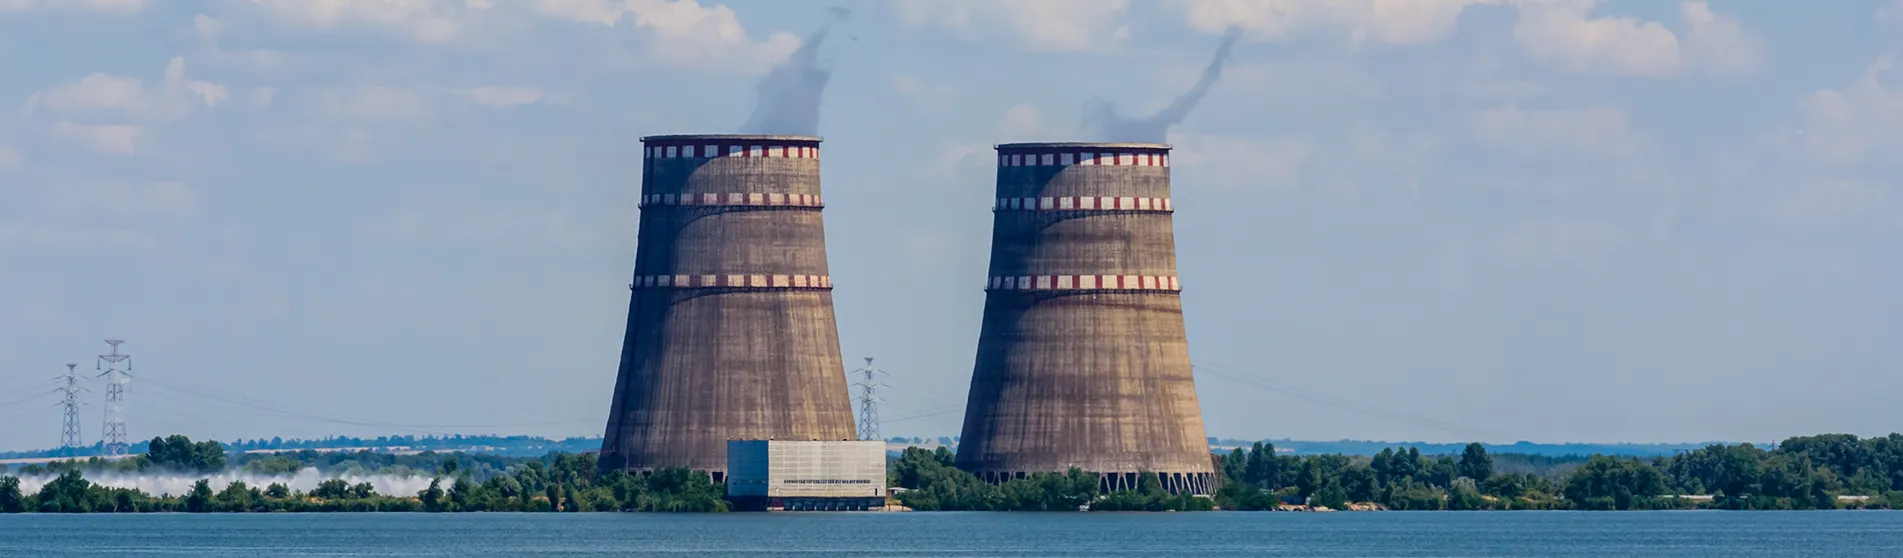 Zaporizhzhia nuclear plant